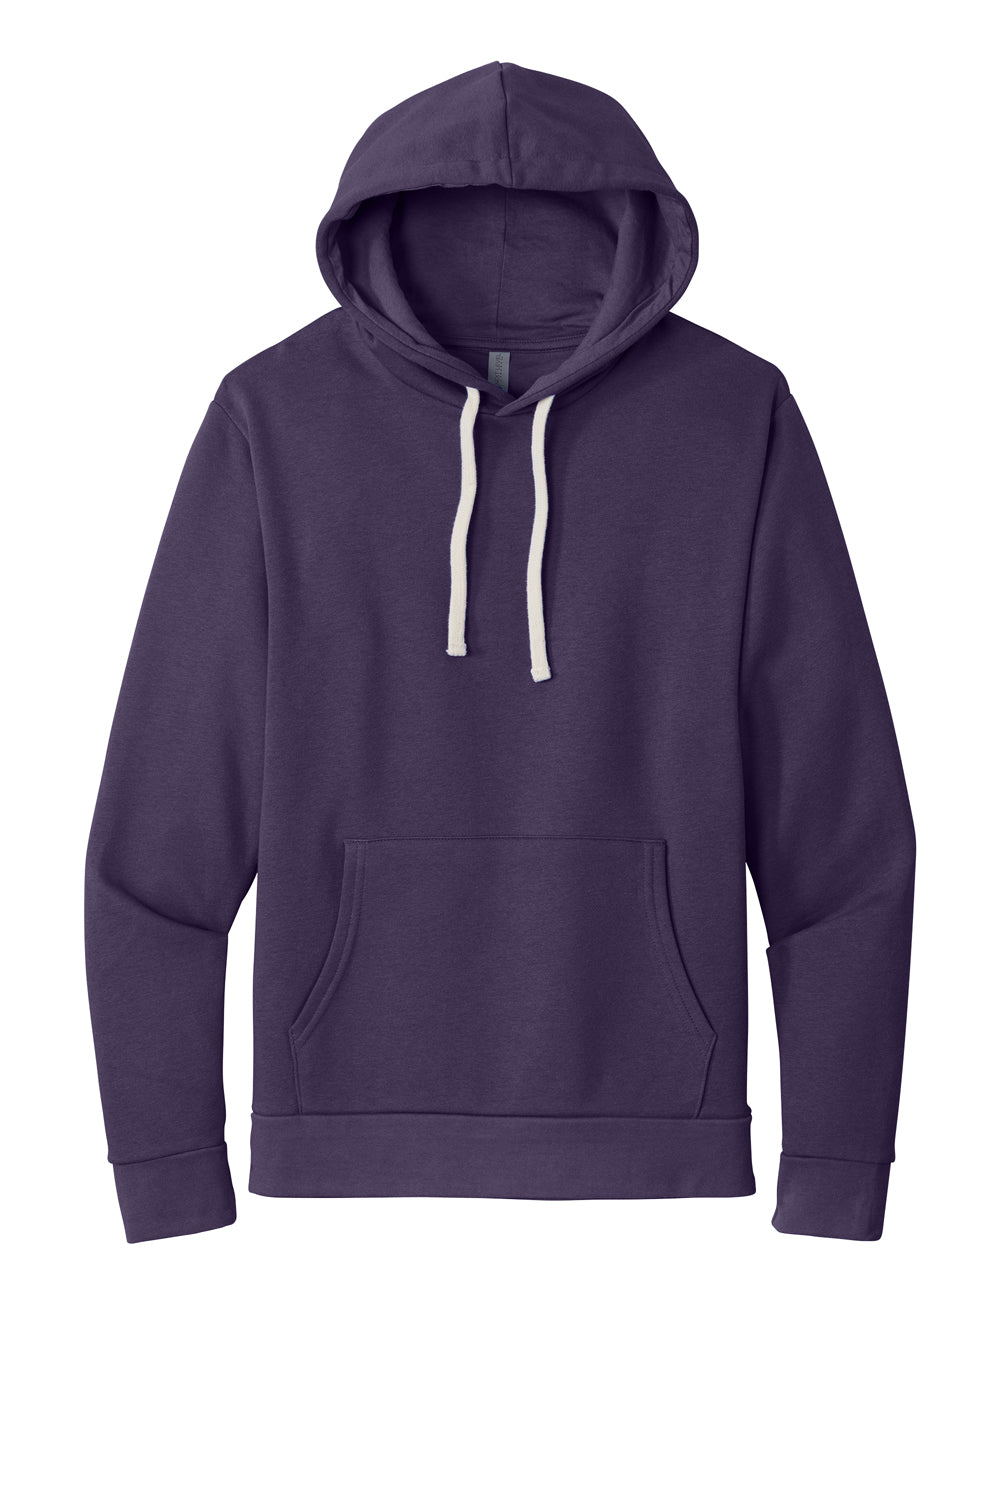 Next Level Mens Fleece Hooded Sweatshirt Hoodie Galaxy Purple Flat Front